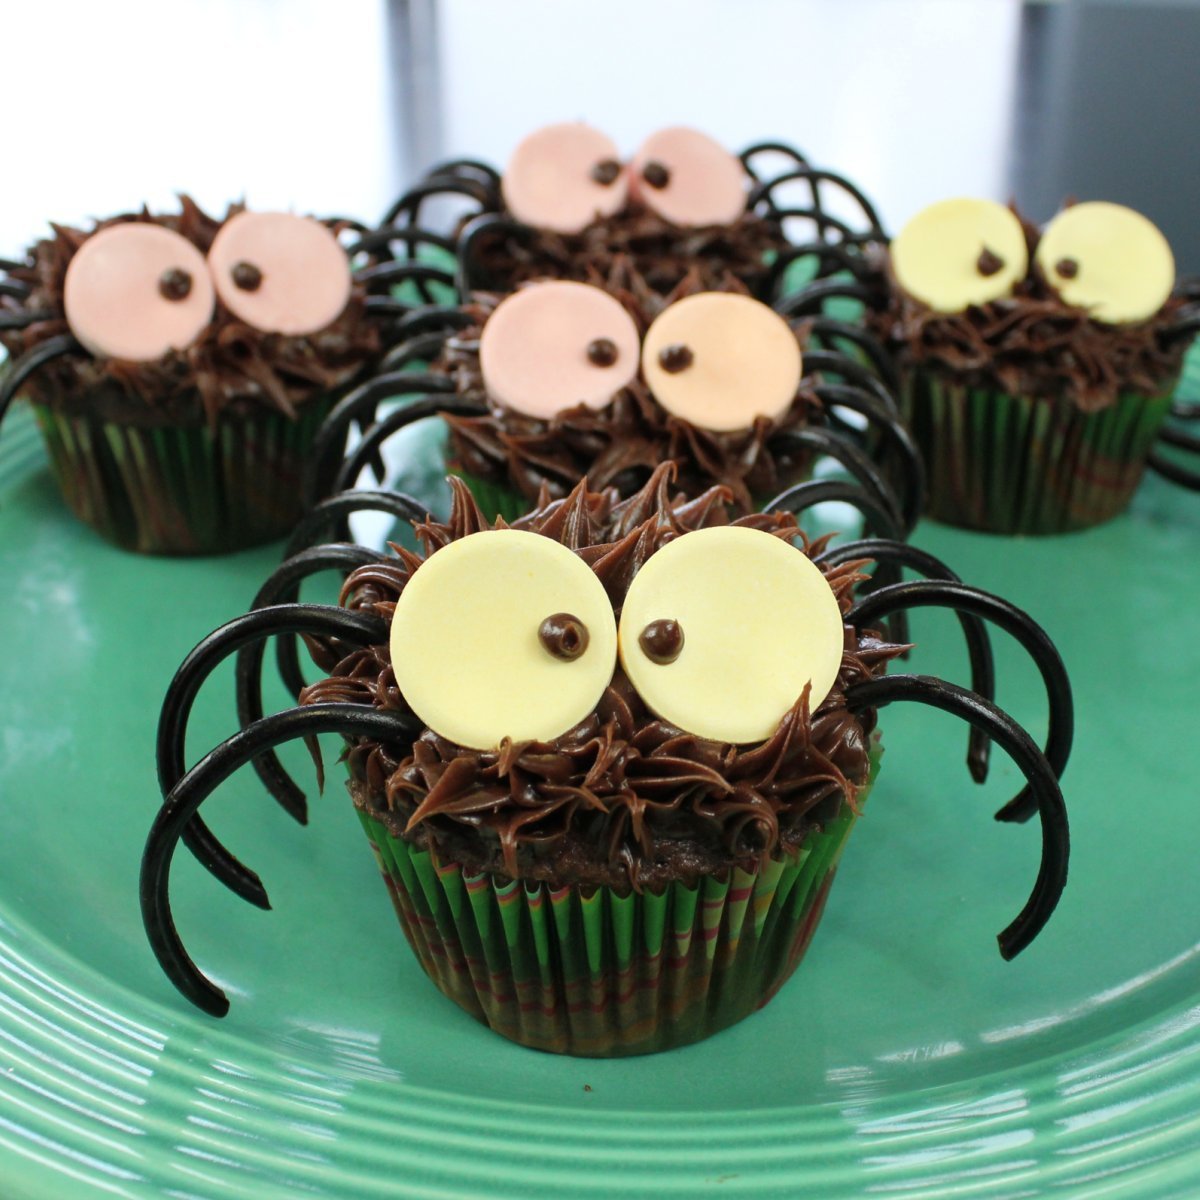 Making Spider Cupcakes | My Frugal Halloween